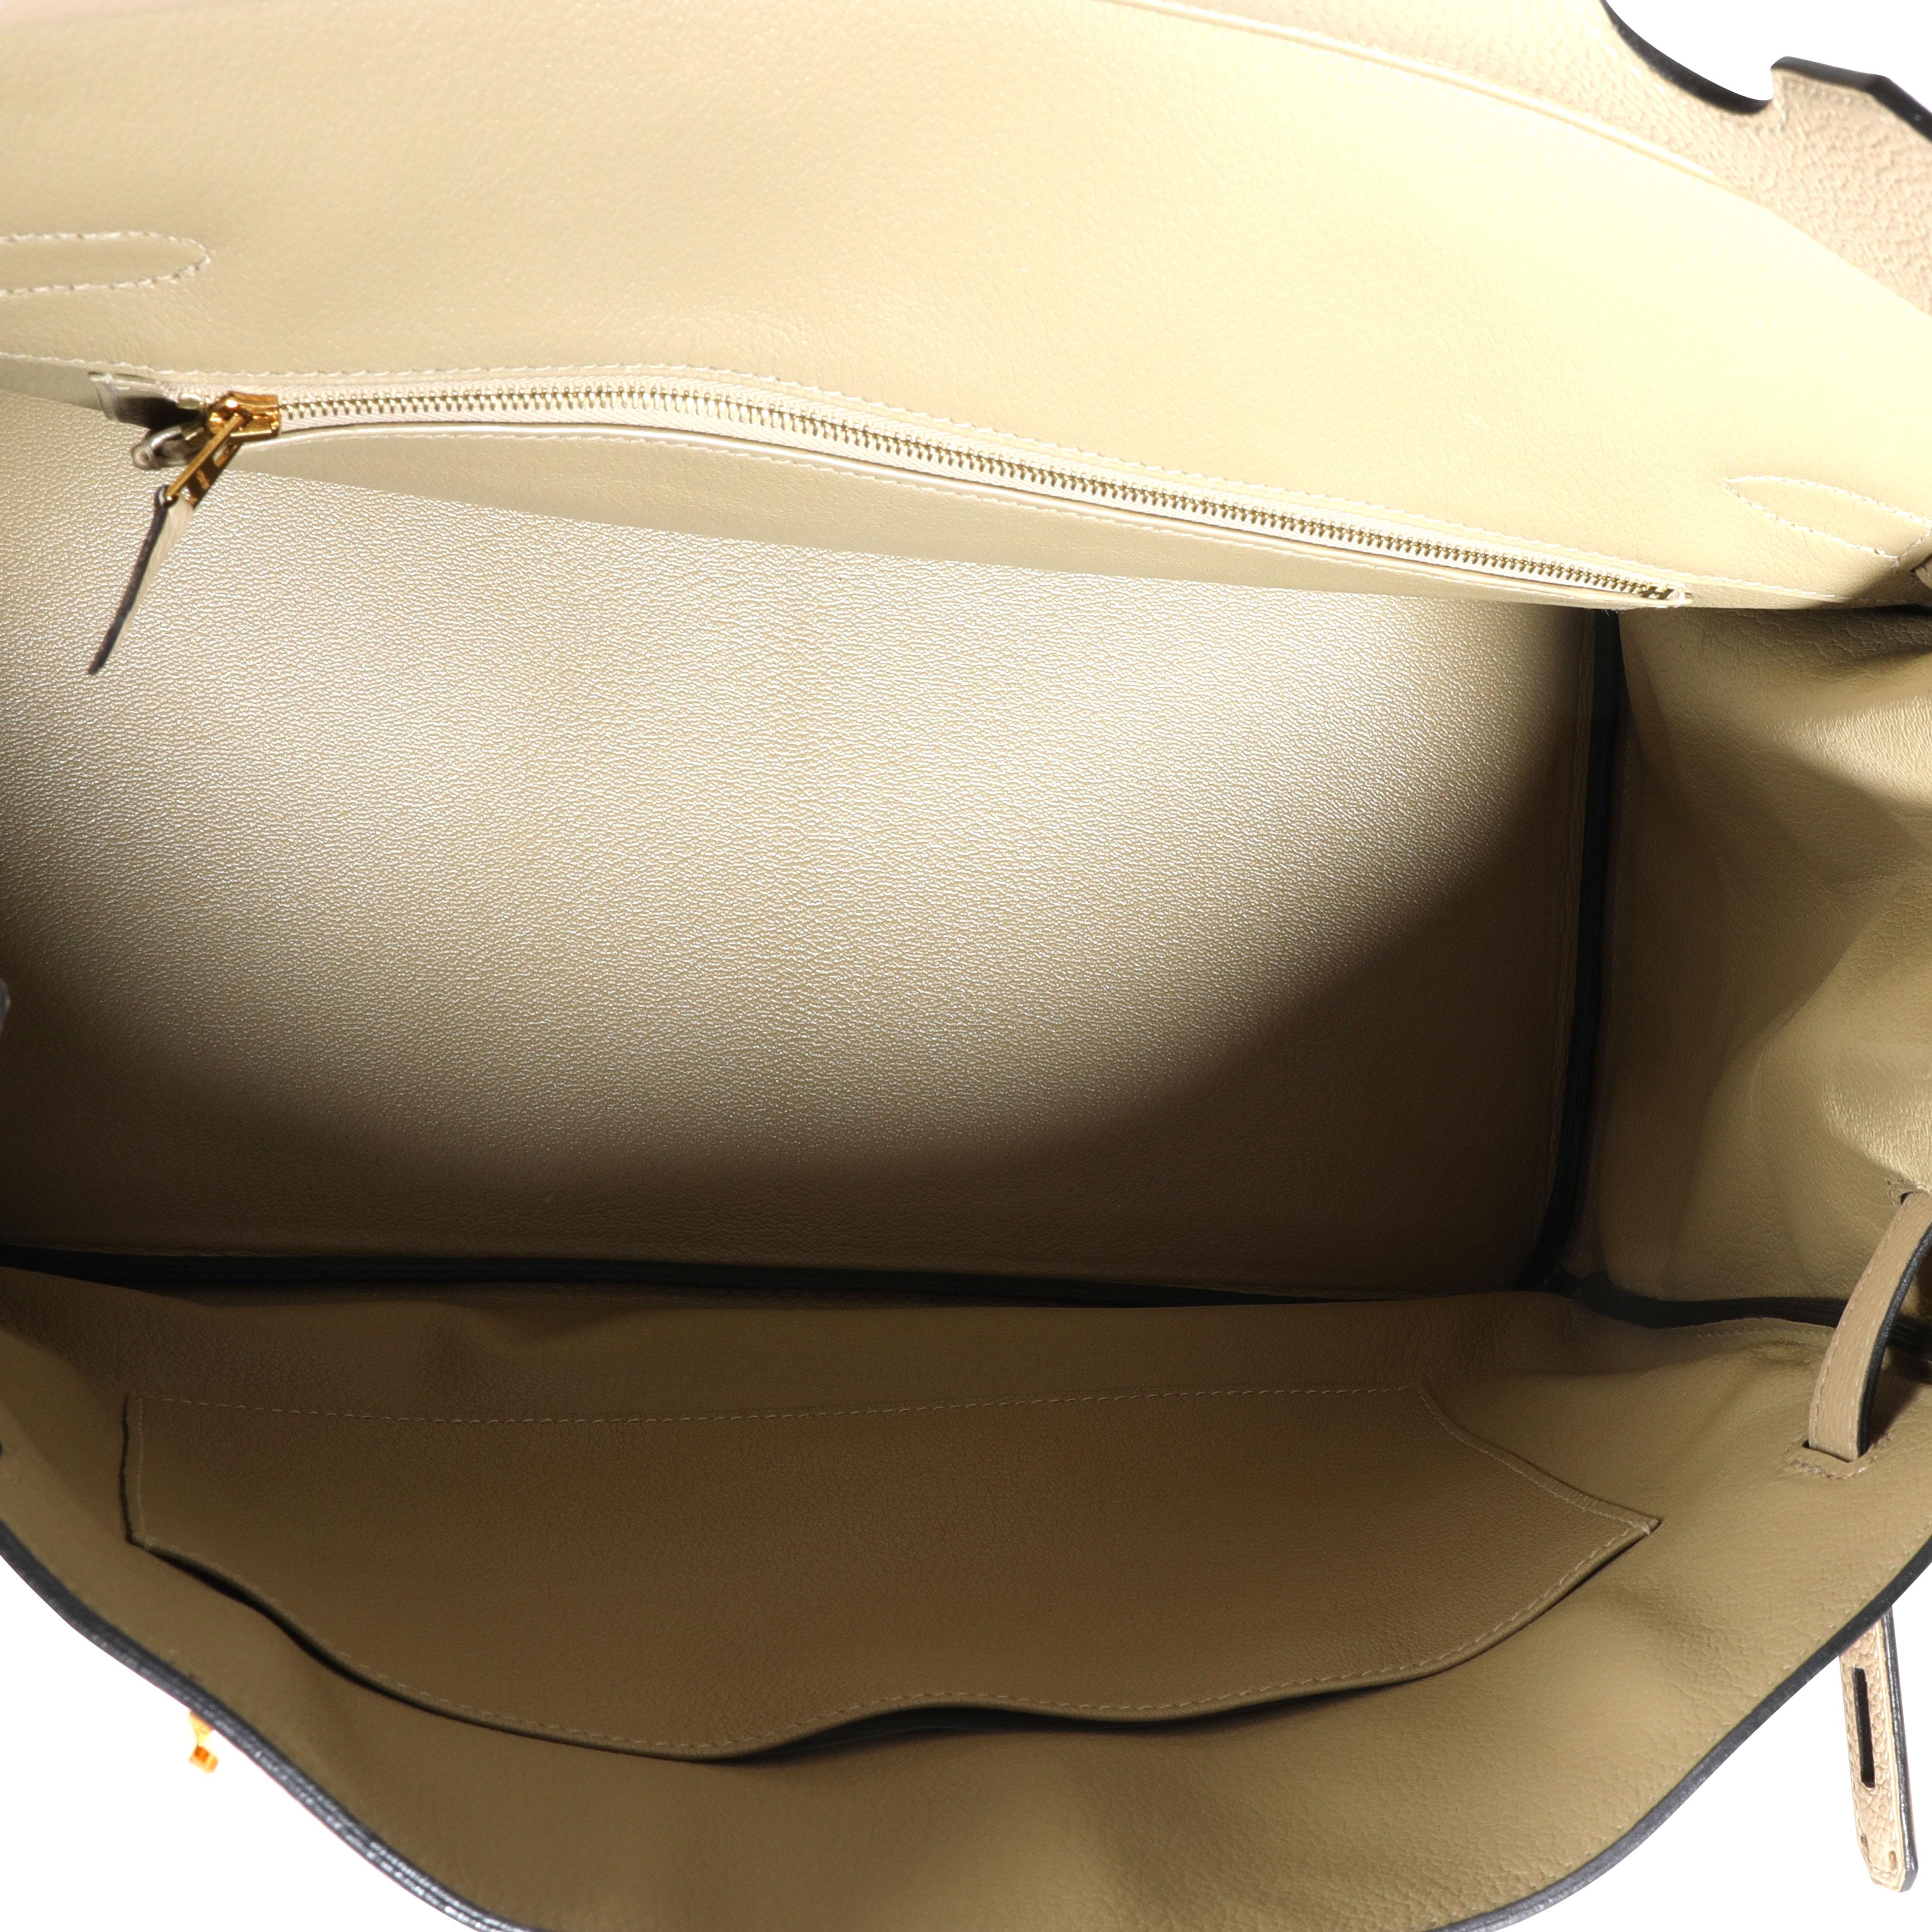 Hermès Trench Togo Birkin 35 GHW
SKU: 110985

Handbag Condition: Very Good
Condition Comments: Very Good Condition. Plastic on feet. Light marks to leather. Faint scratching to hardware.
Brand: Hermès
Model: Birkin

Origin Country: France
Handbag